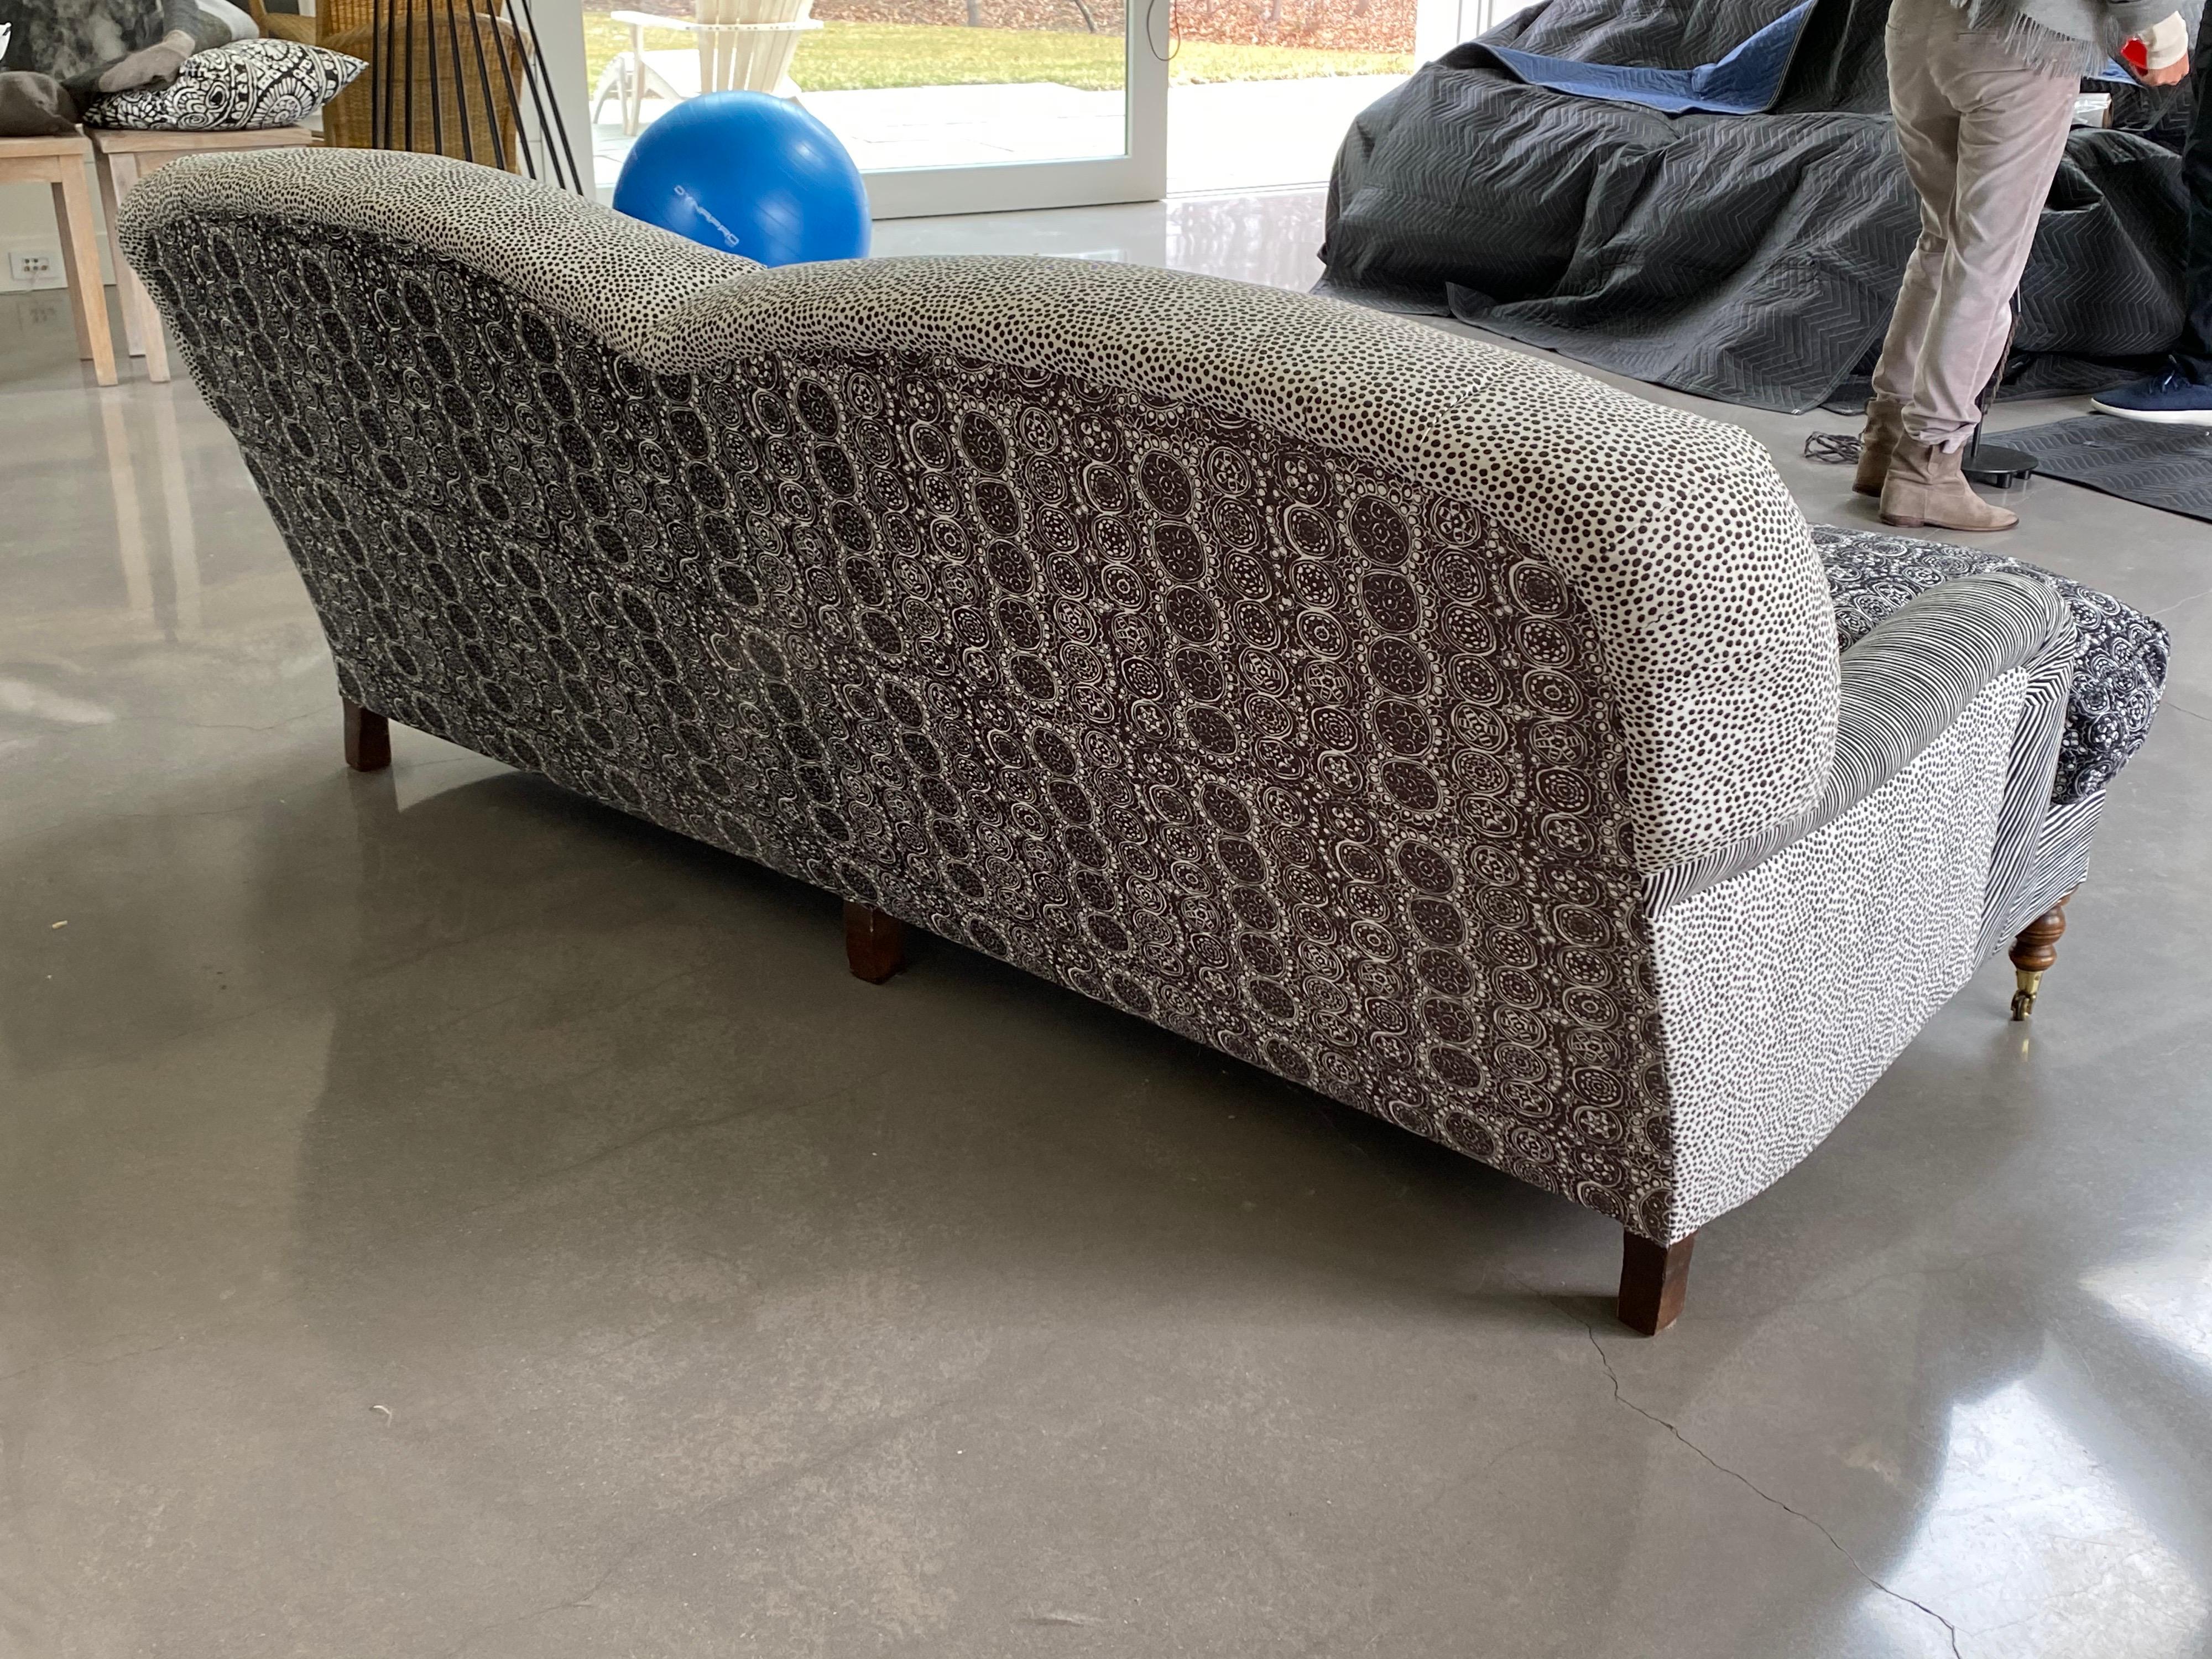 George Sherlock Extended Two Seater Sofa covered in Marimekko Fabrics 2